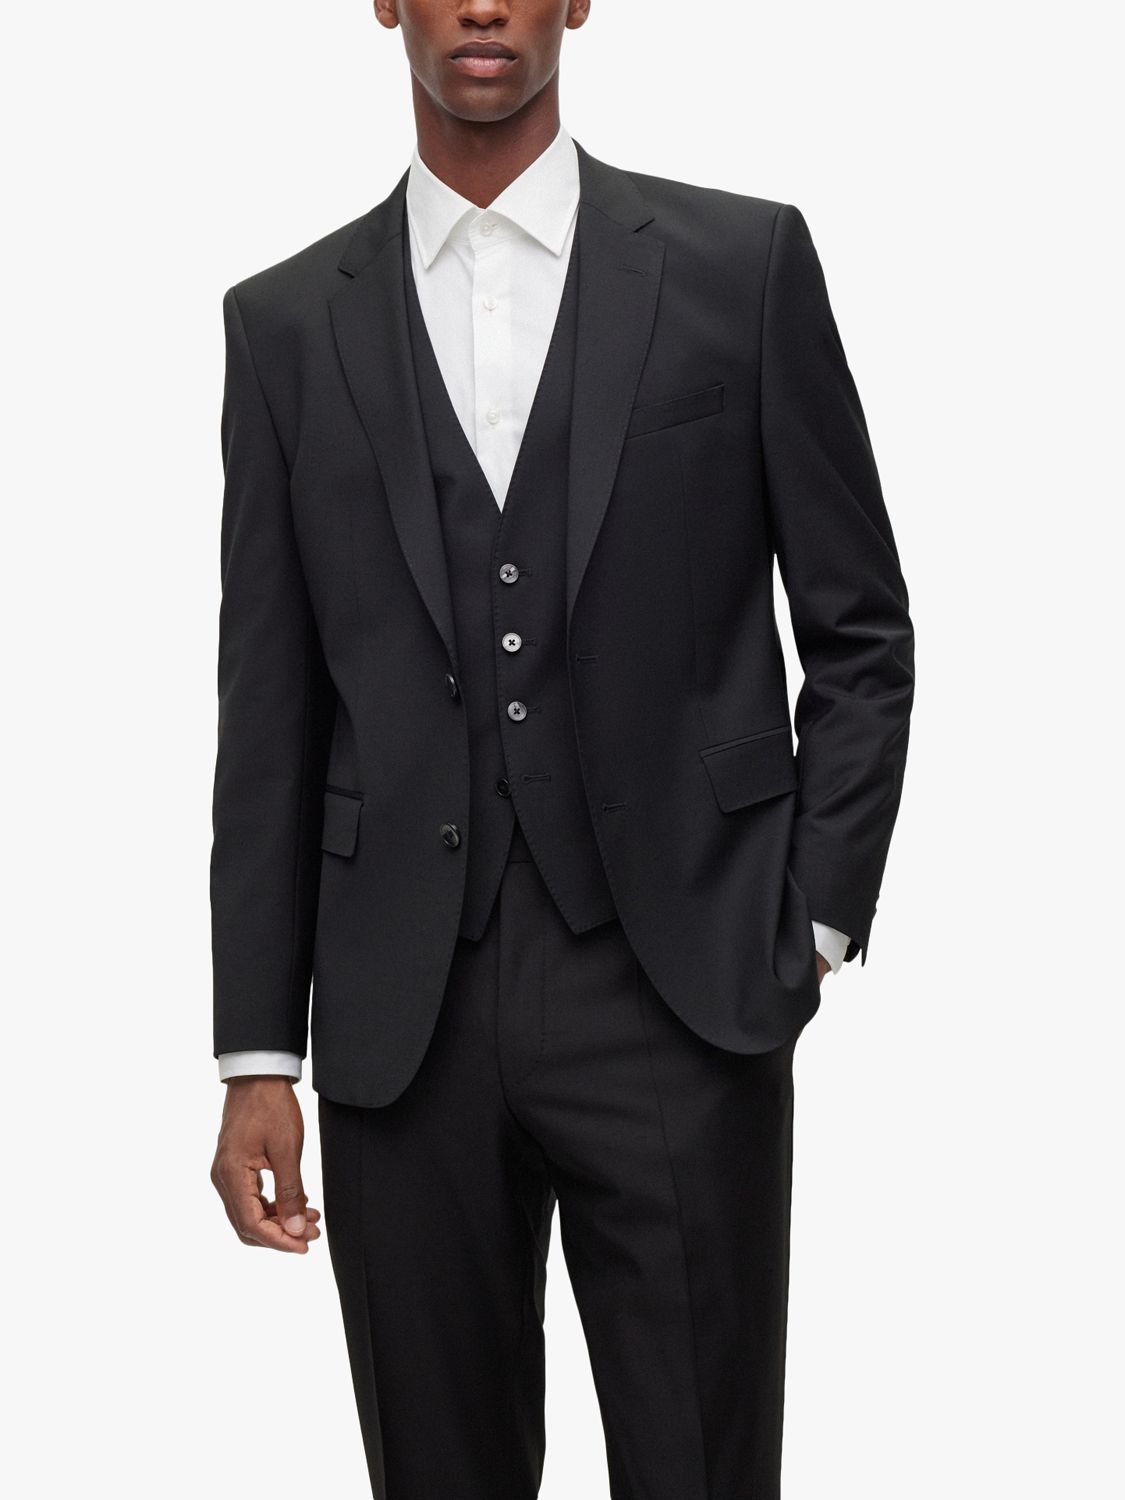 BOSS Jasper Wool Blend Suit Jacket, Black at John Lewis & Partners